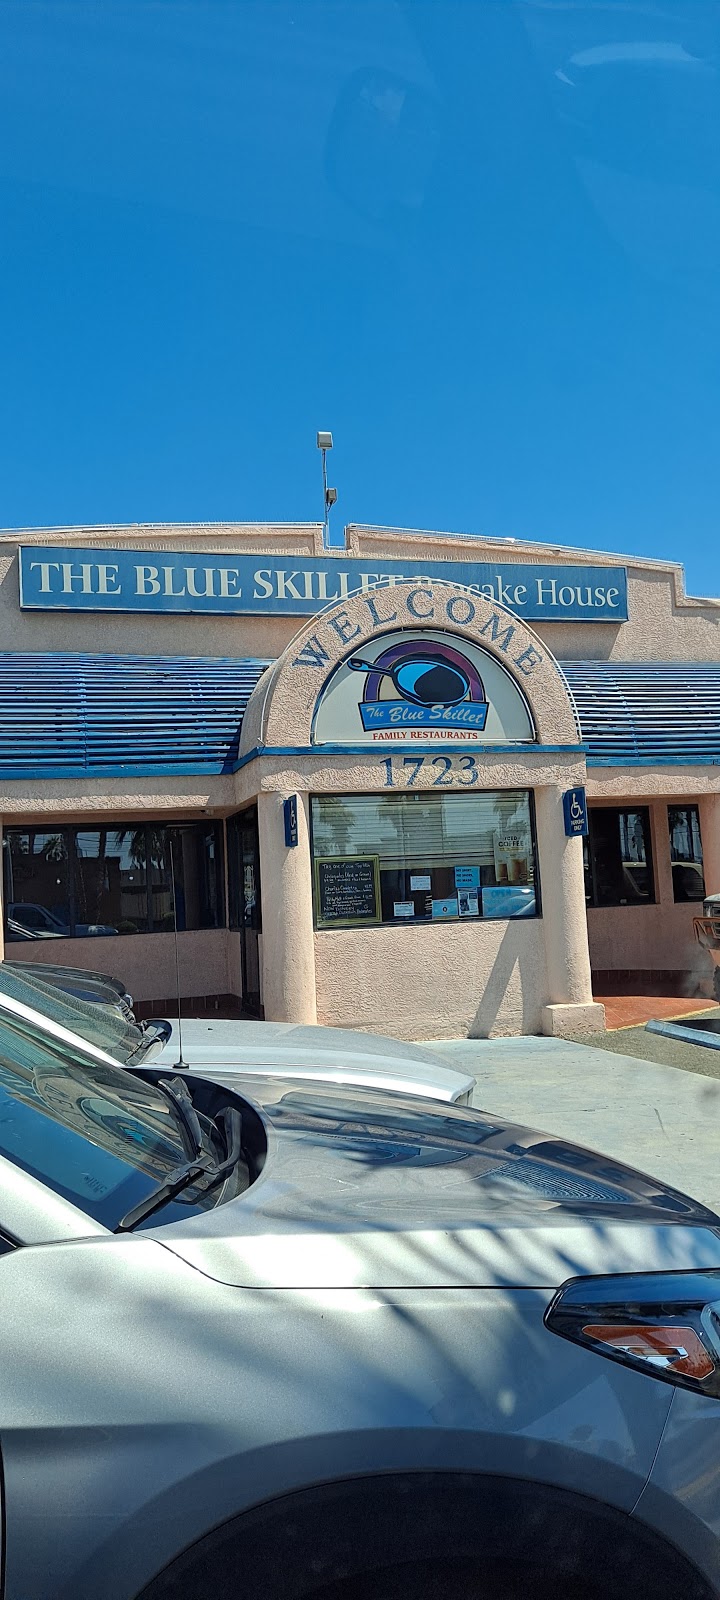 The Blue Skillet Pancake House